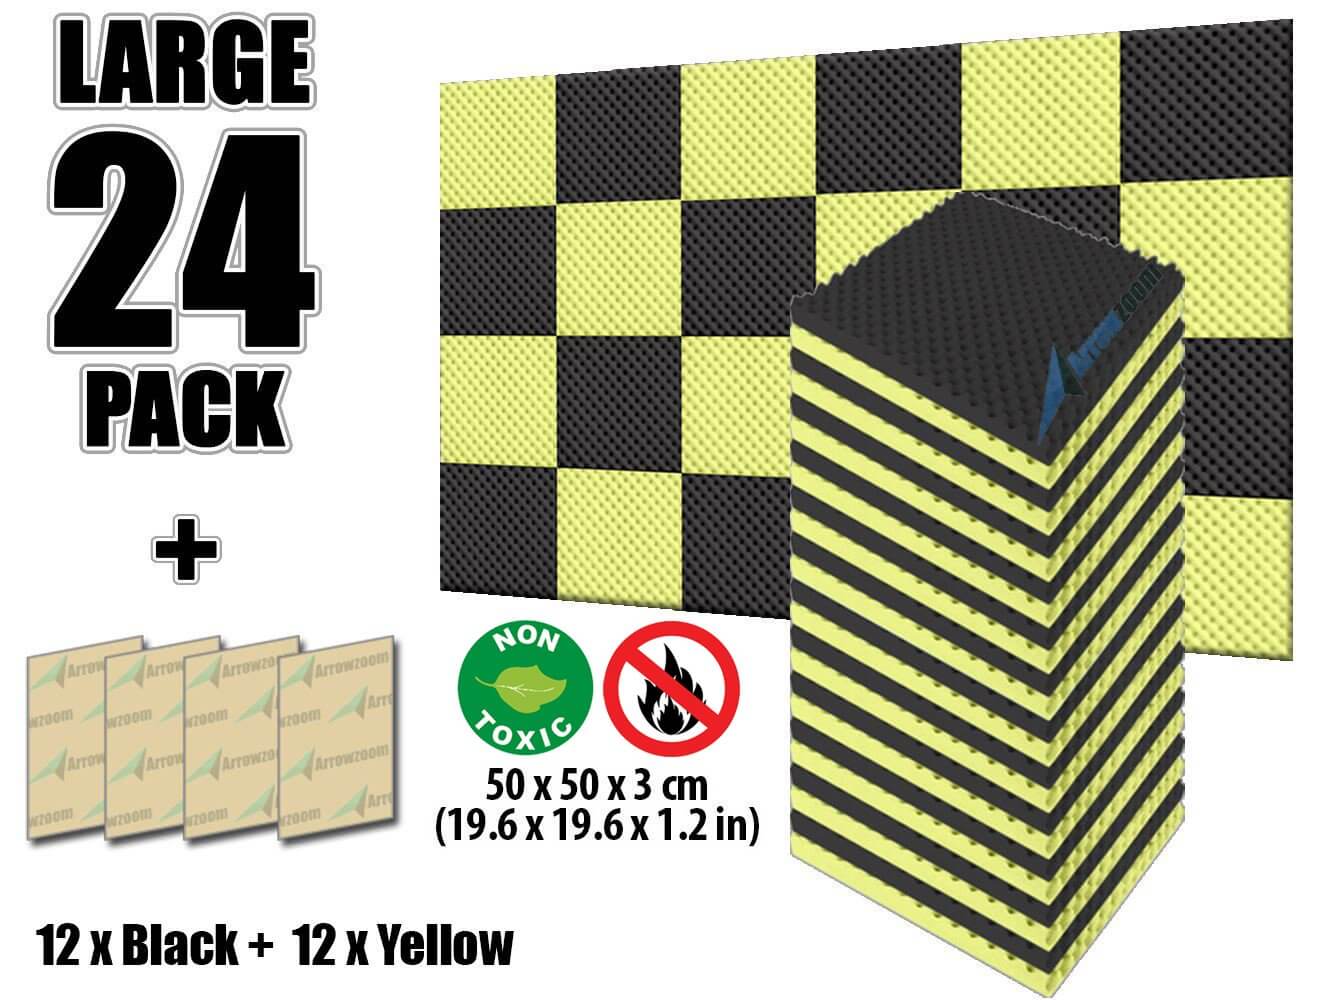 Arrowzoom Eggcrate Convoluted Series Acoustic Foam - Black x Yellow Bundle - KK1052 24 Pieces - 25 x 25 x 3 cm/ 10x10x2 in